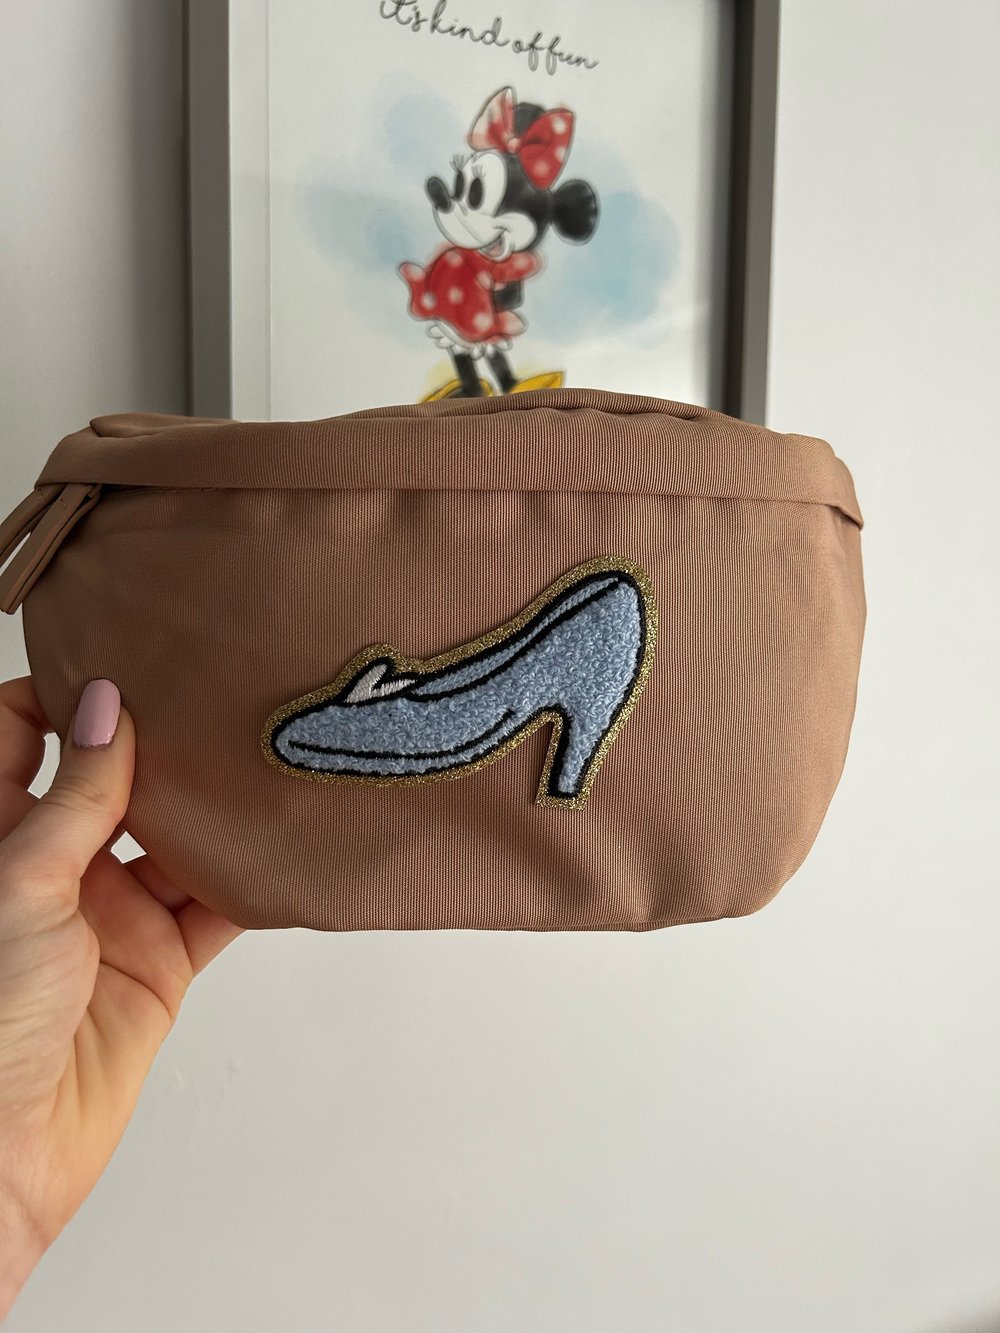 Cinderella's glass shoe bum bag